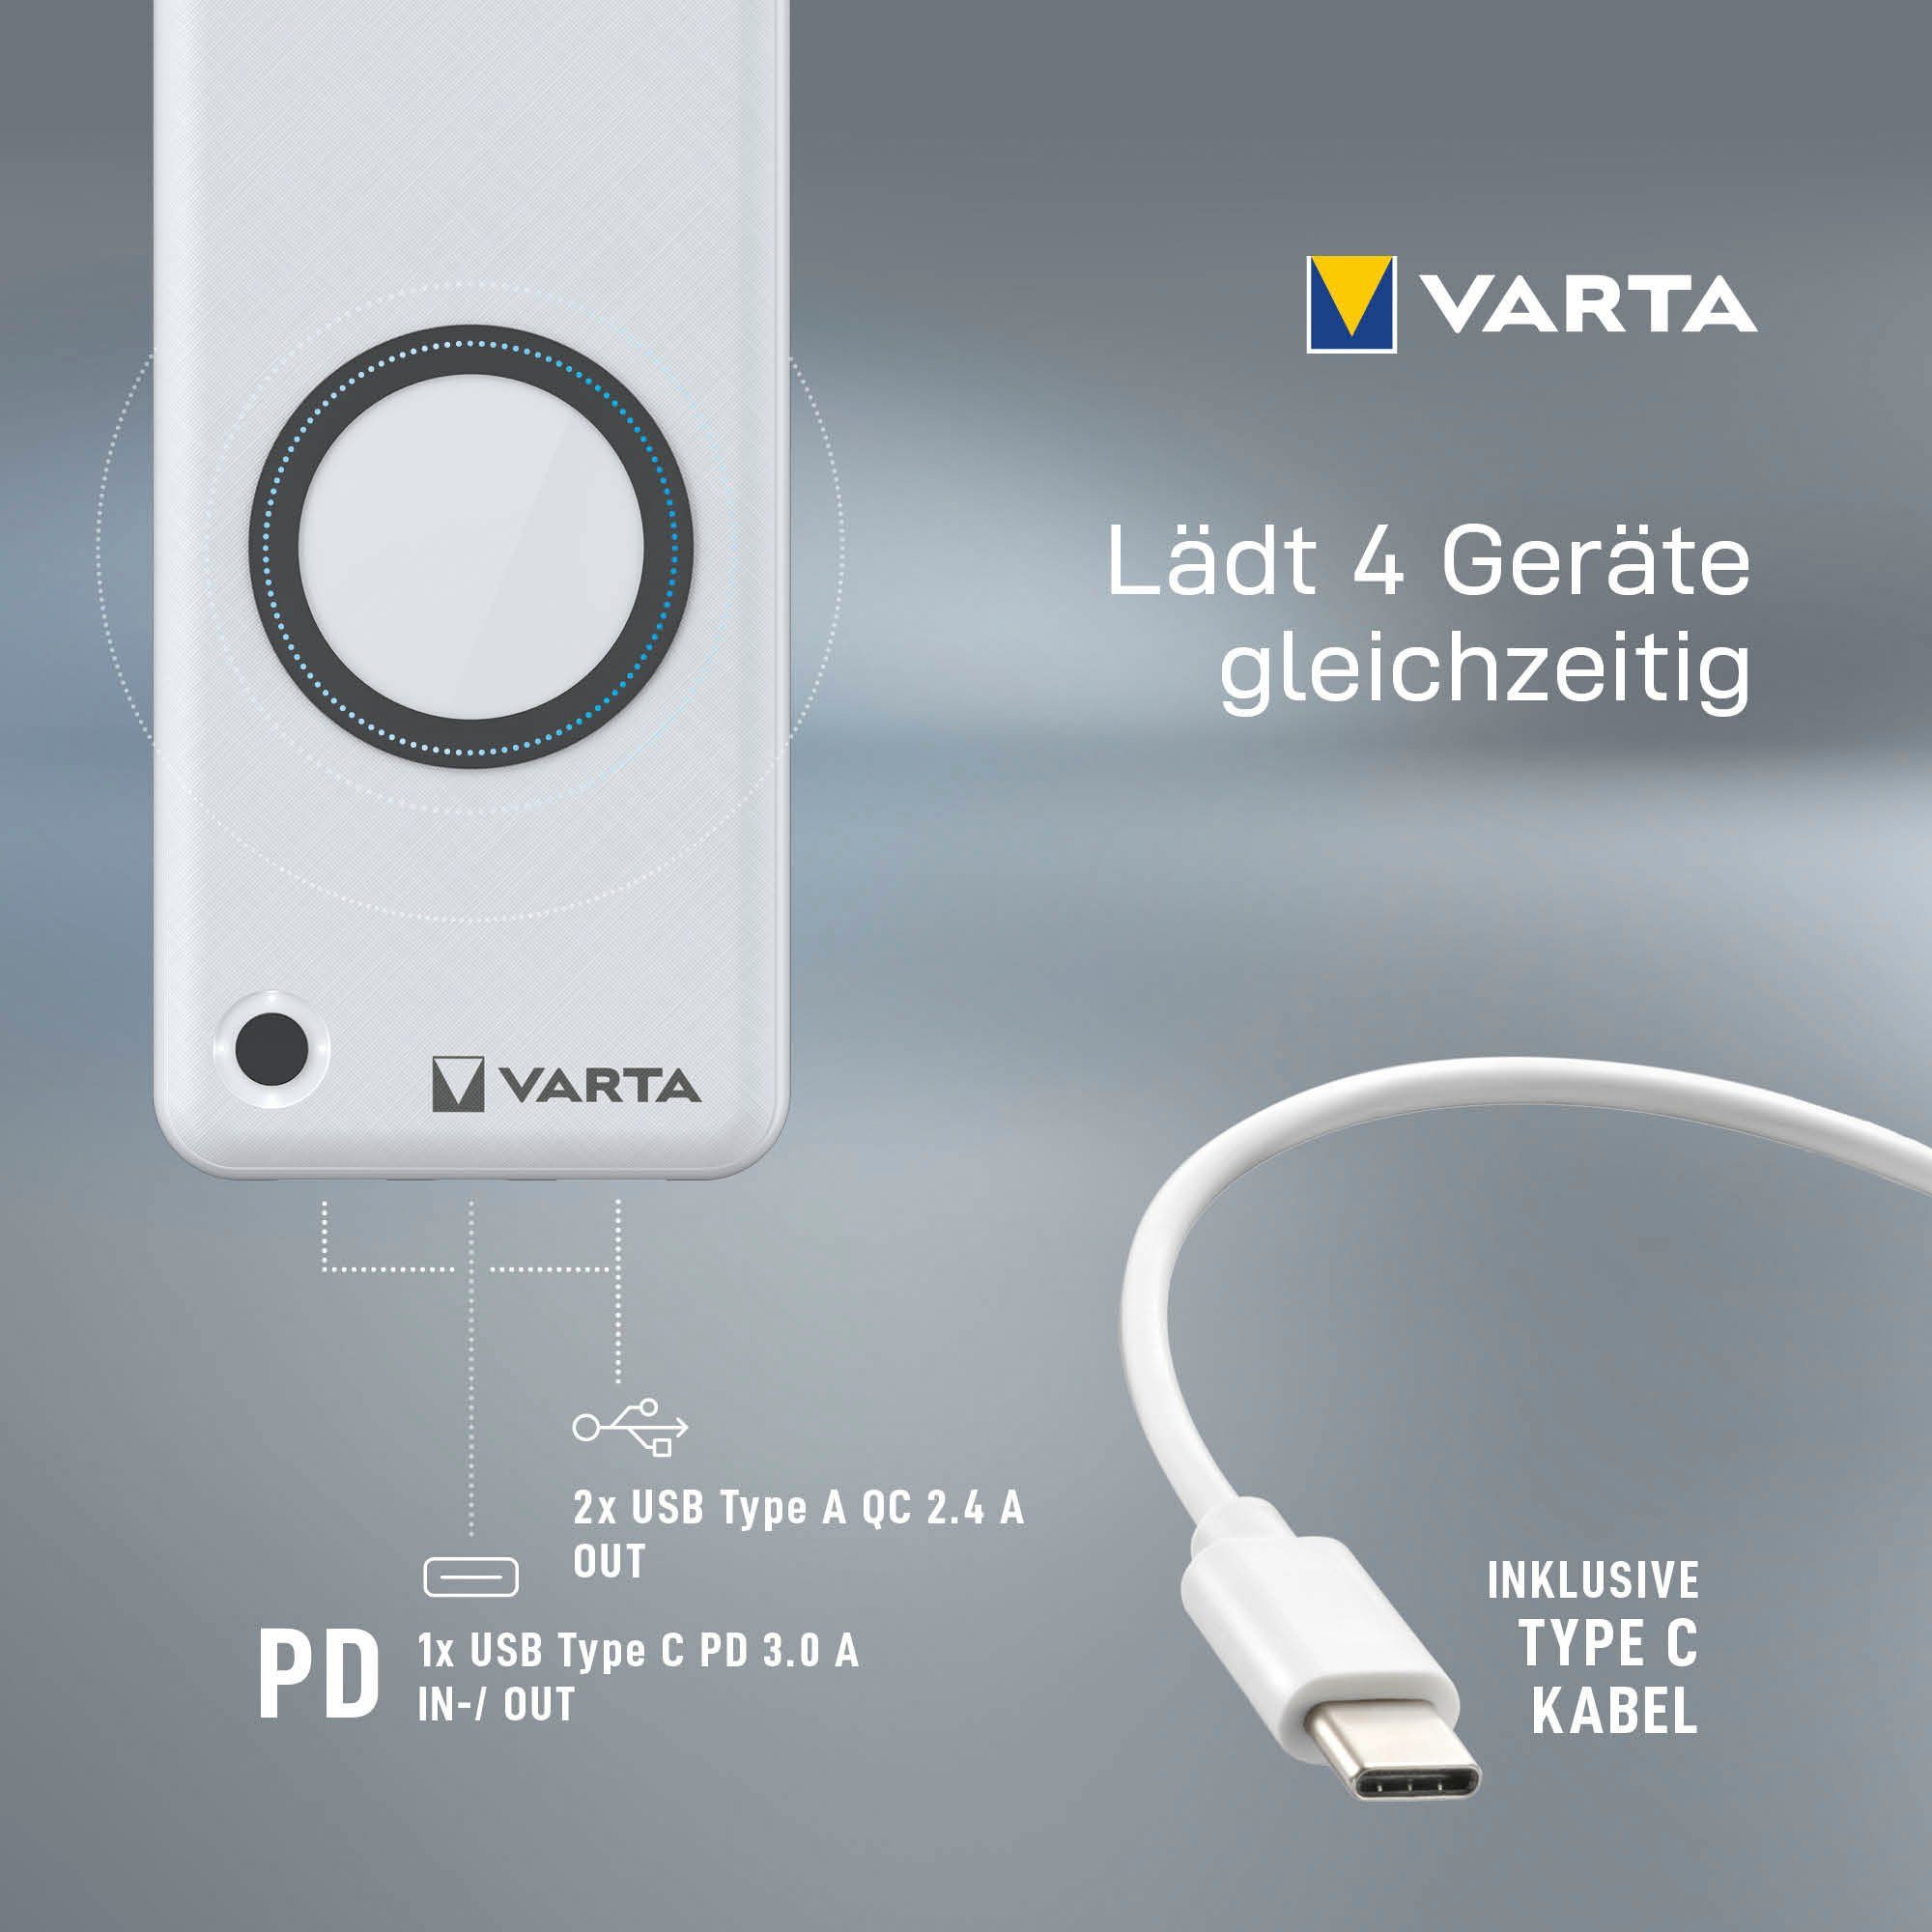 VARTA Wireless Power Bank 20.000 Batterie-Ladegerät